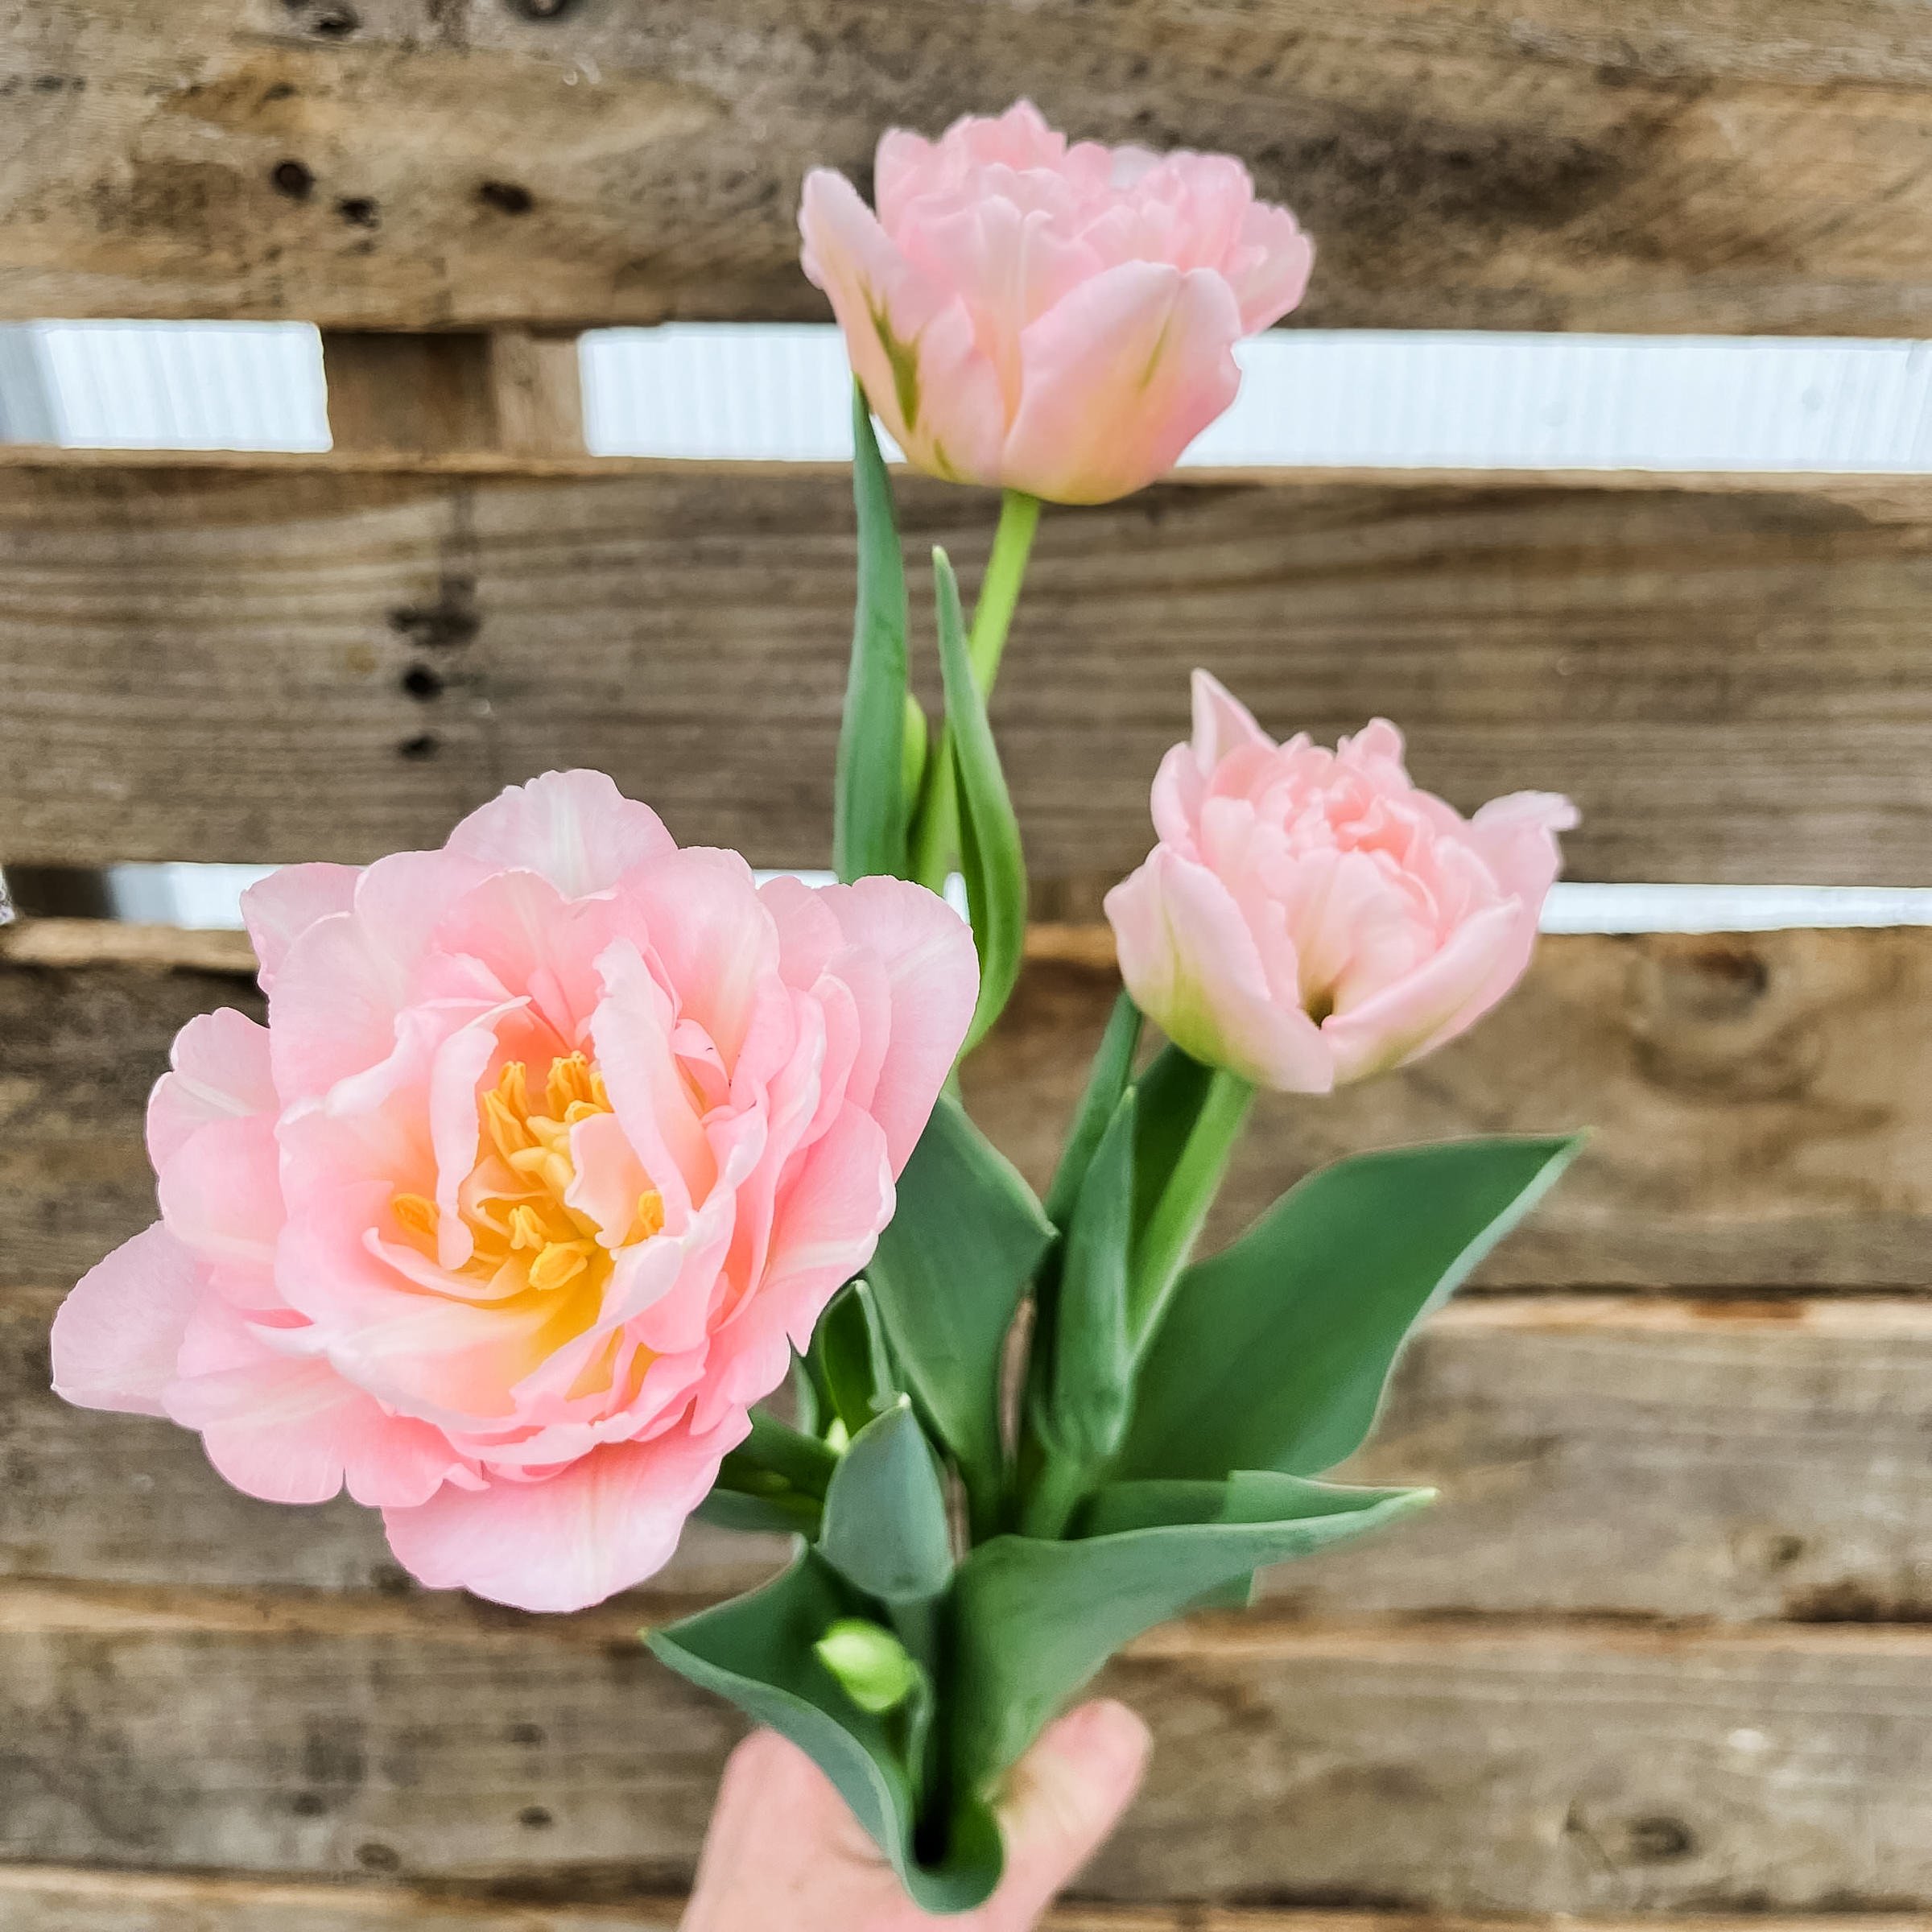 Diddle-And-Zen-Vermont-Wedding-Floral-Designer-Arrangement-Bouquet-Diddle-and-Zen-Vermont-Florist-Tulip-Subscription04.jpg